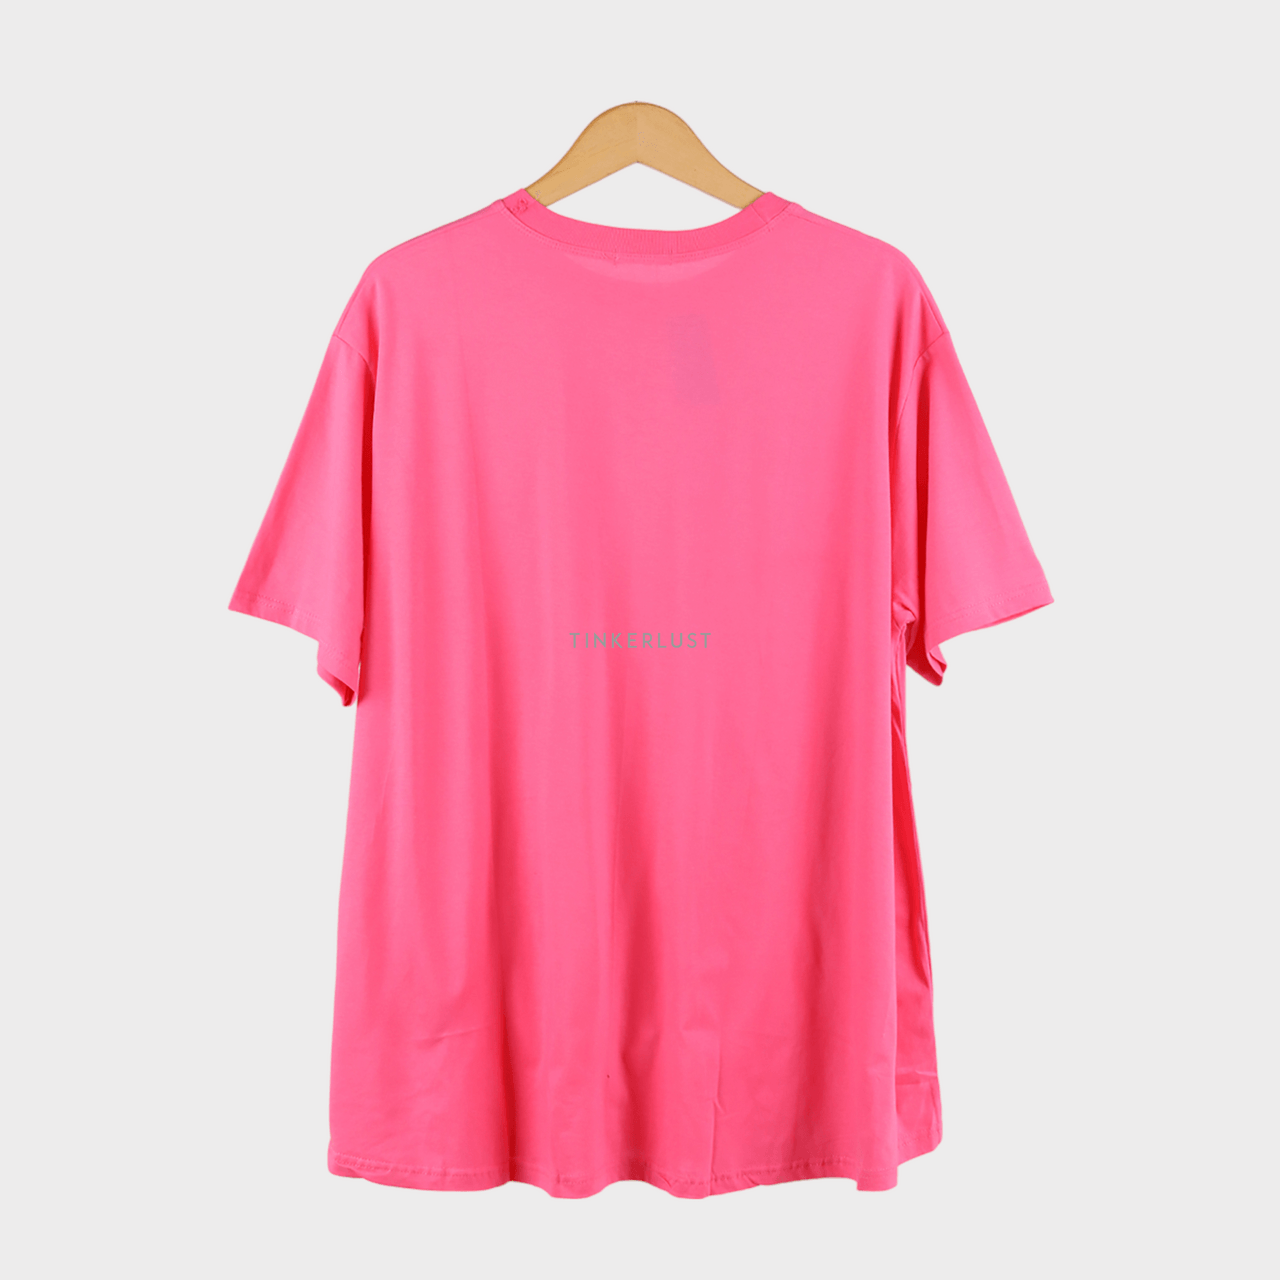 Pluffy's Choice Pink T-shirt